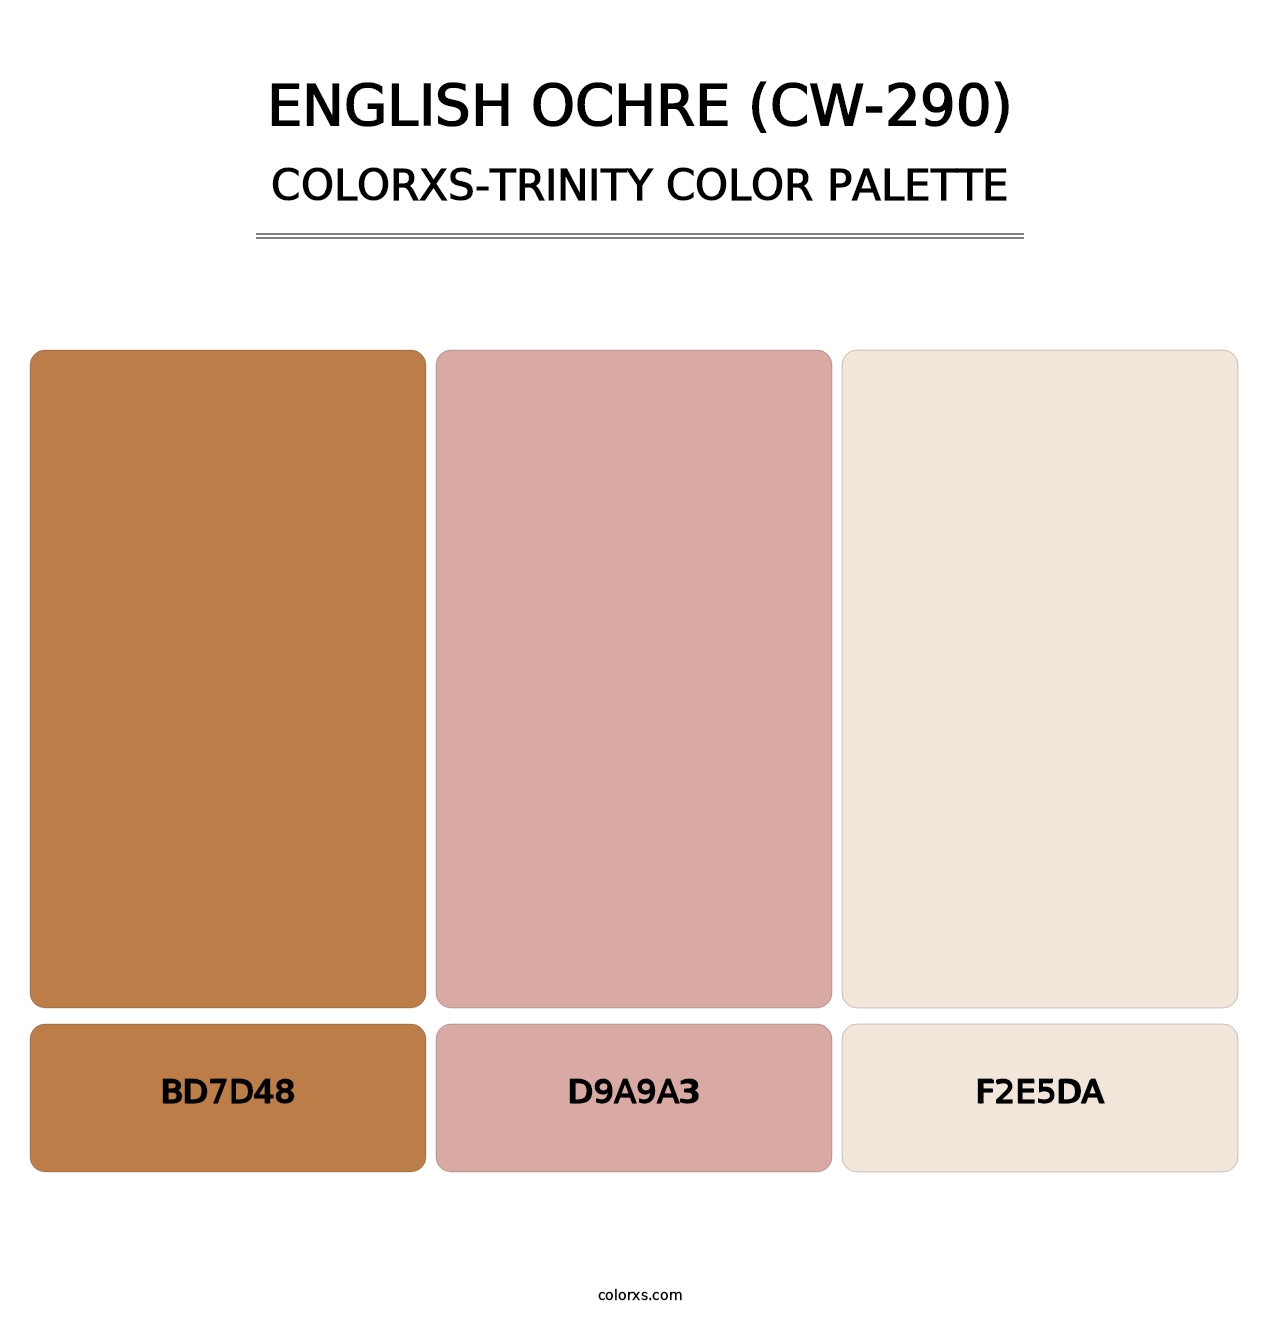 English Ochre (CW-290) - Colorxs Trinity Palette